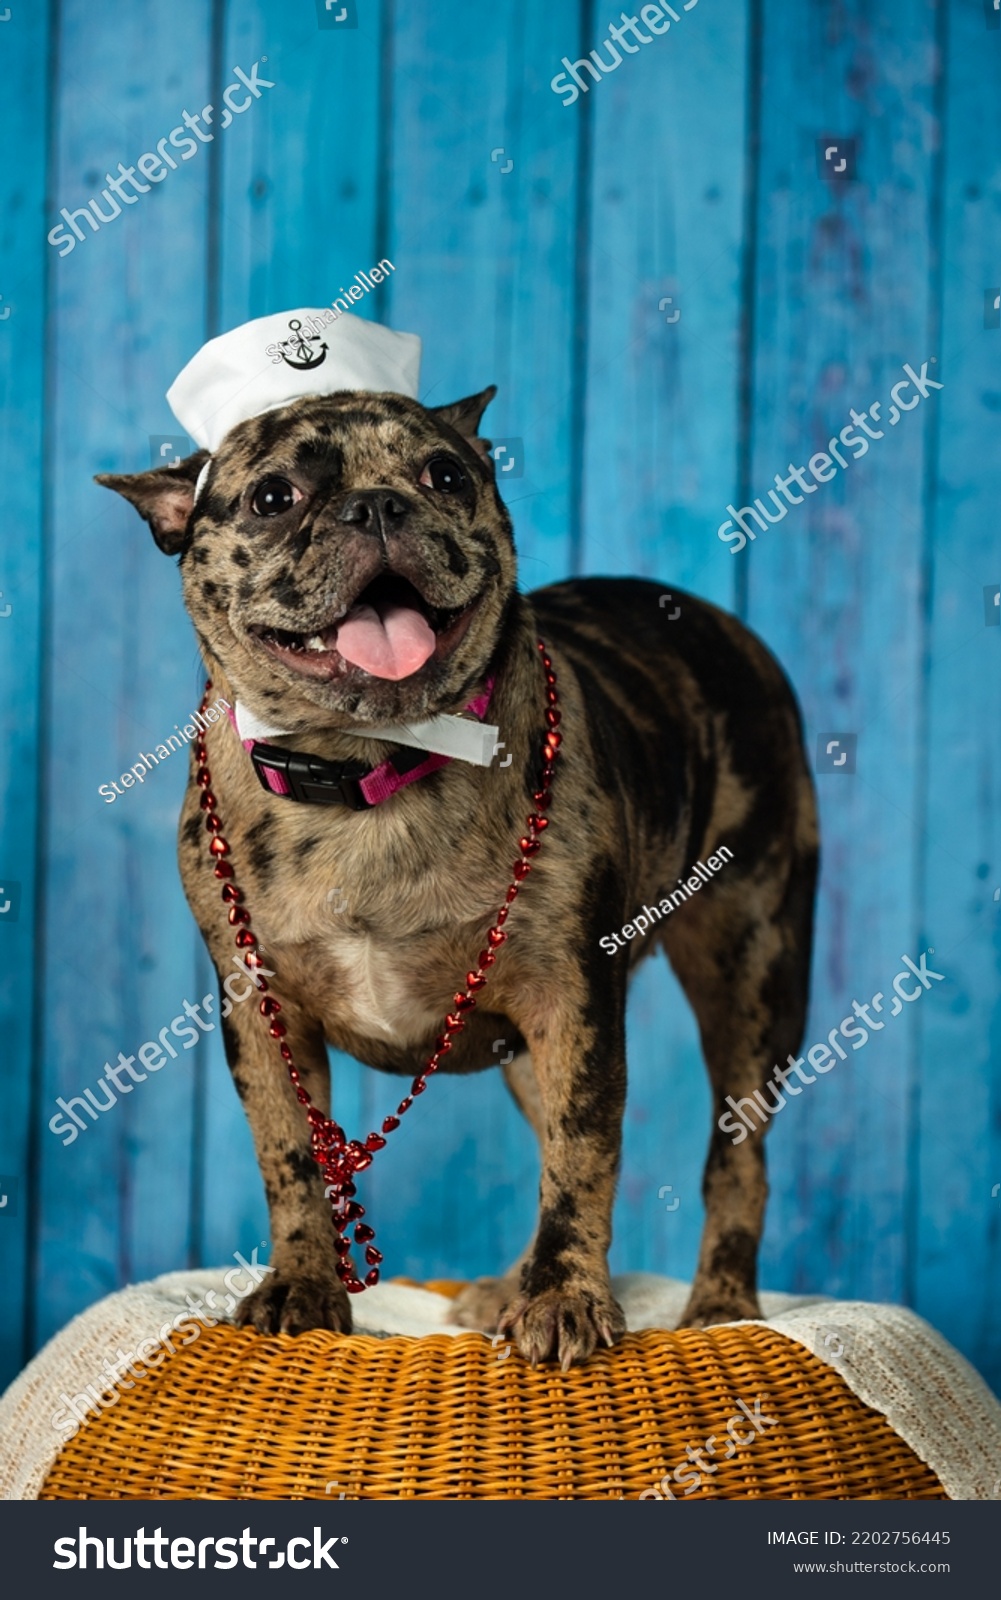 86 Bulldog In Sailor Hat Images, Stock Photos & Vectors | Shutterstock